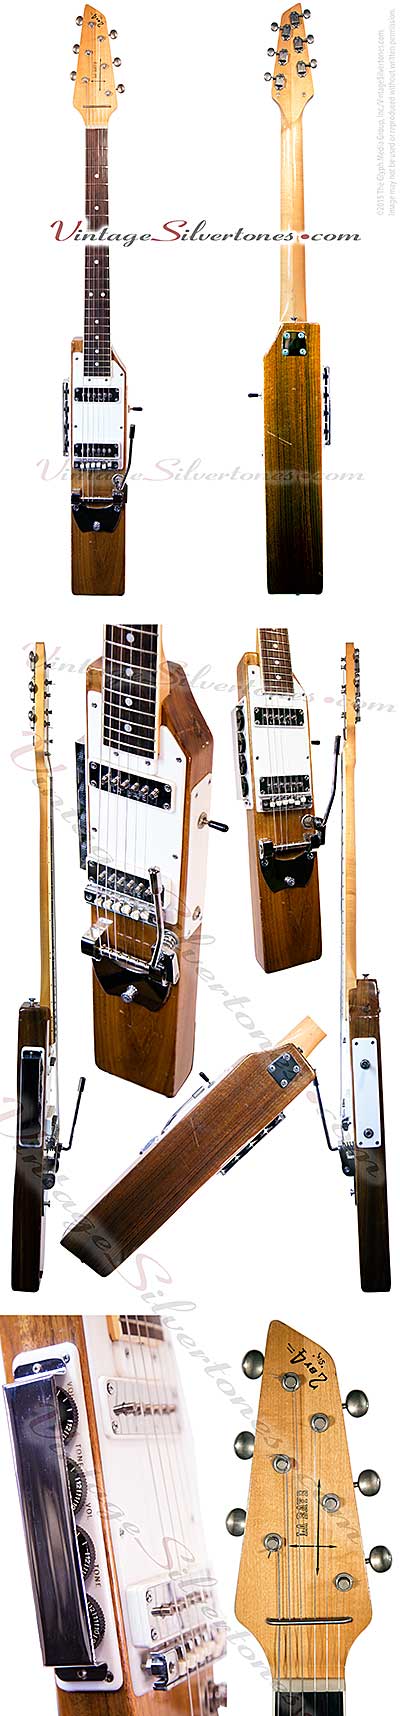 La Baye 2x4 Six guitar- 2 pickup, natural finish, solid body electric guitar, tremolo, made in Neodesha, Kansas USA circa 1967